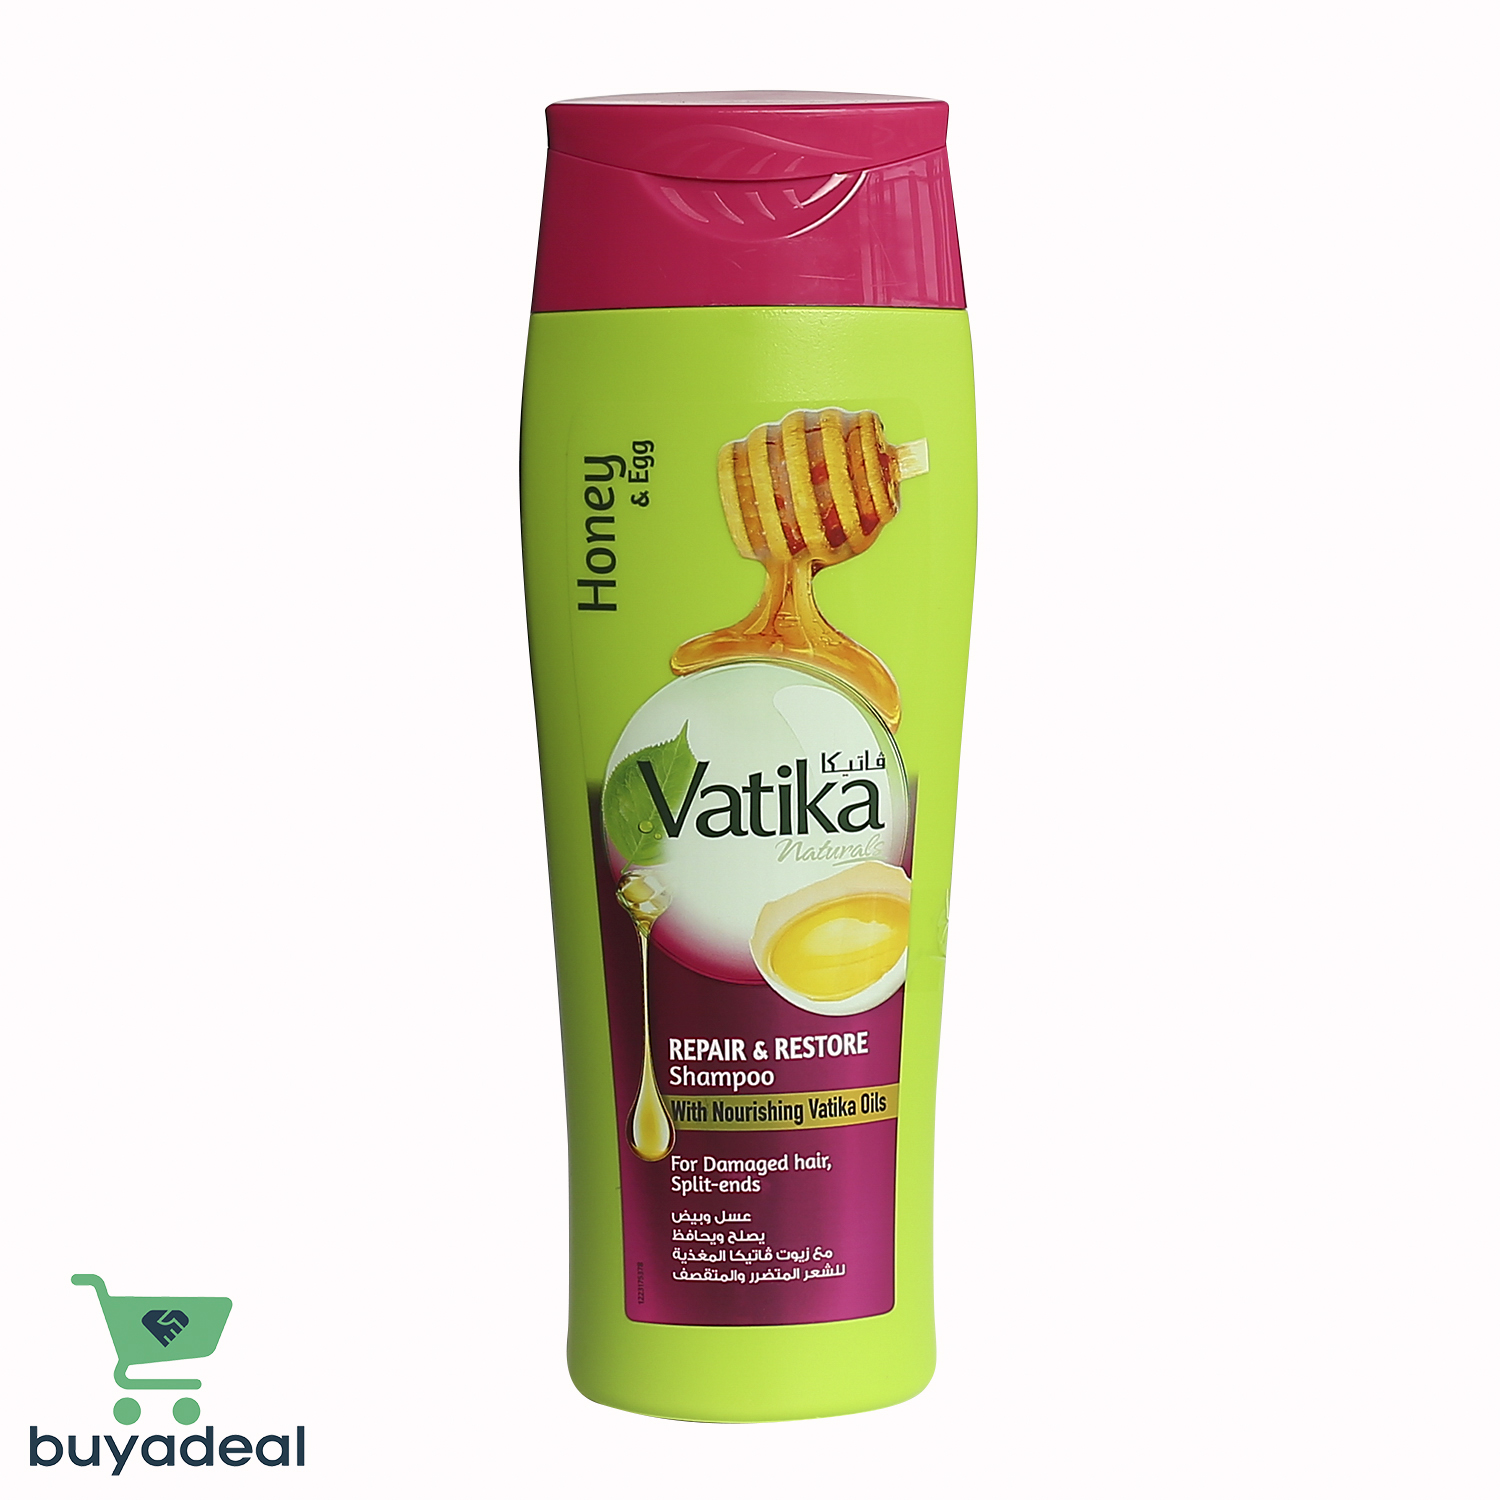 Buyadeal Product Vatika Naturals Repair & Restore Shampoo 200ml